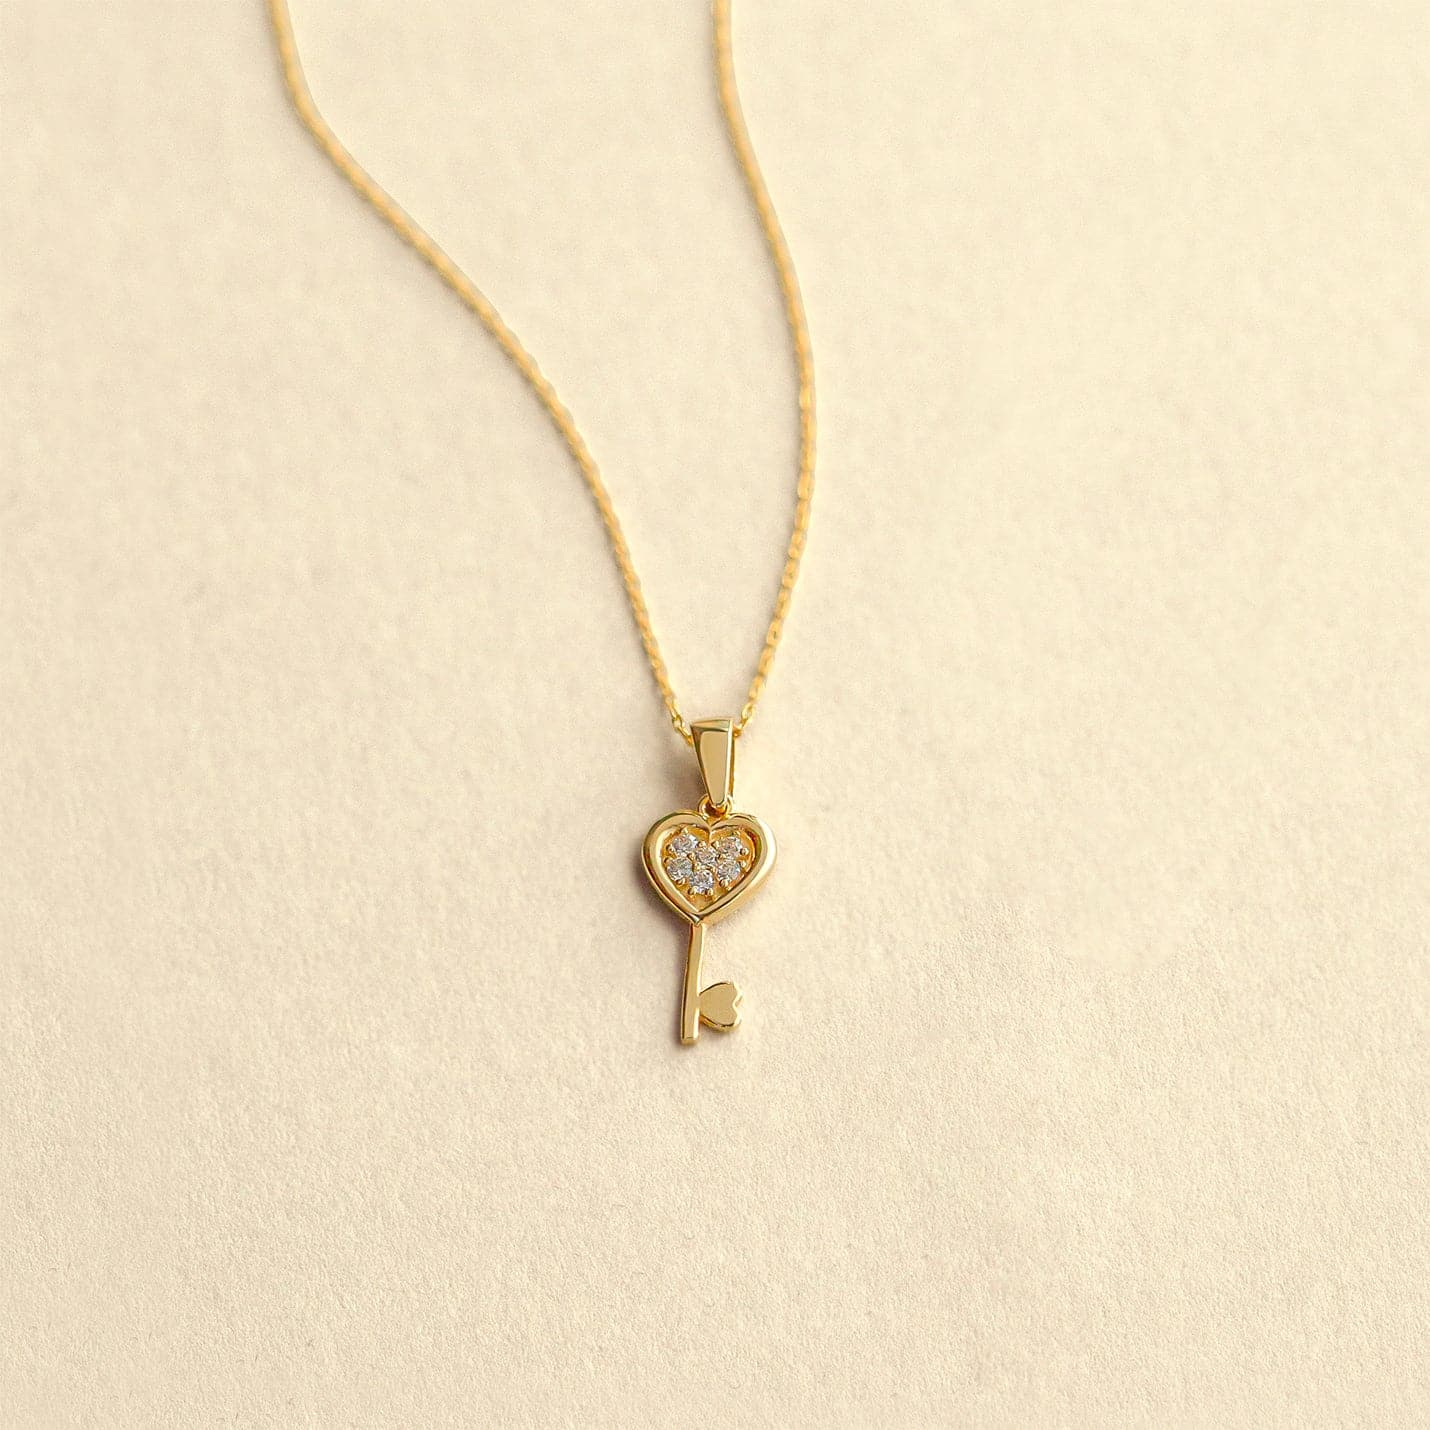 Heart Shaped Key Necklace in 14k Solid Gold - Gelin Diamond